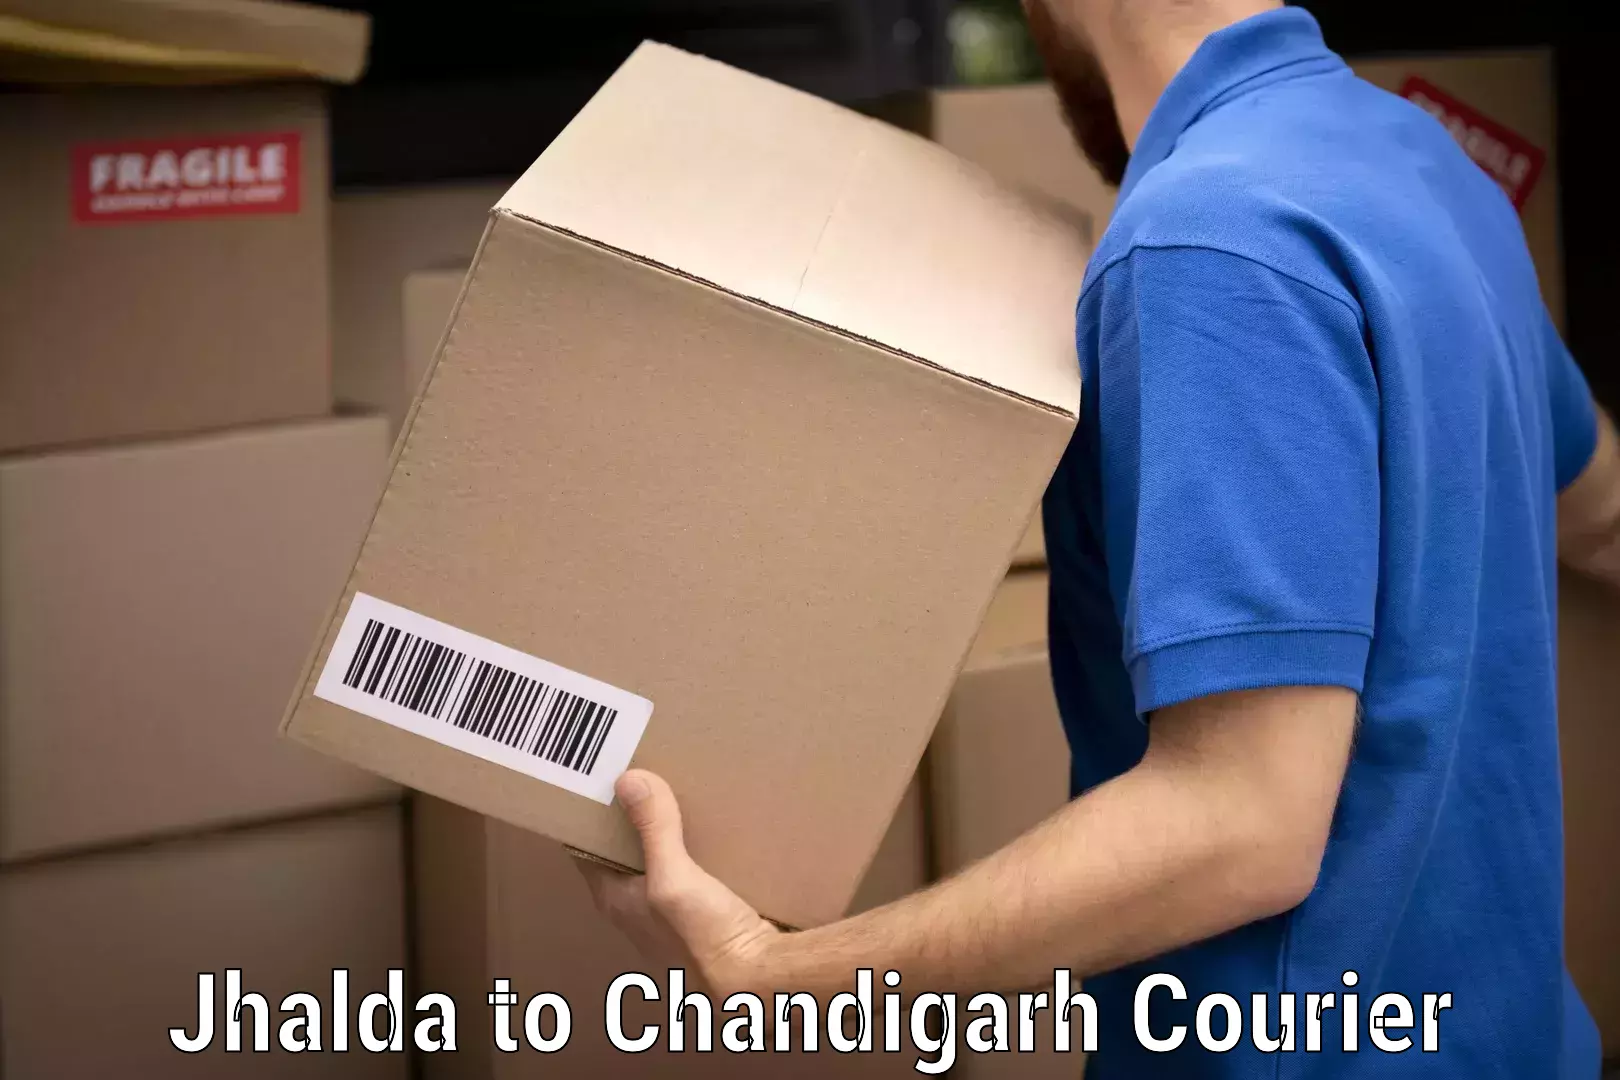 Professional moving company Jhalda to Chandigarh